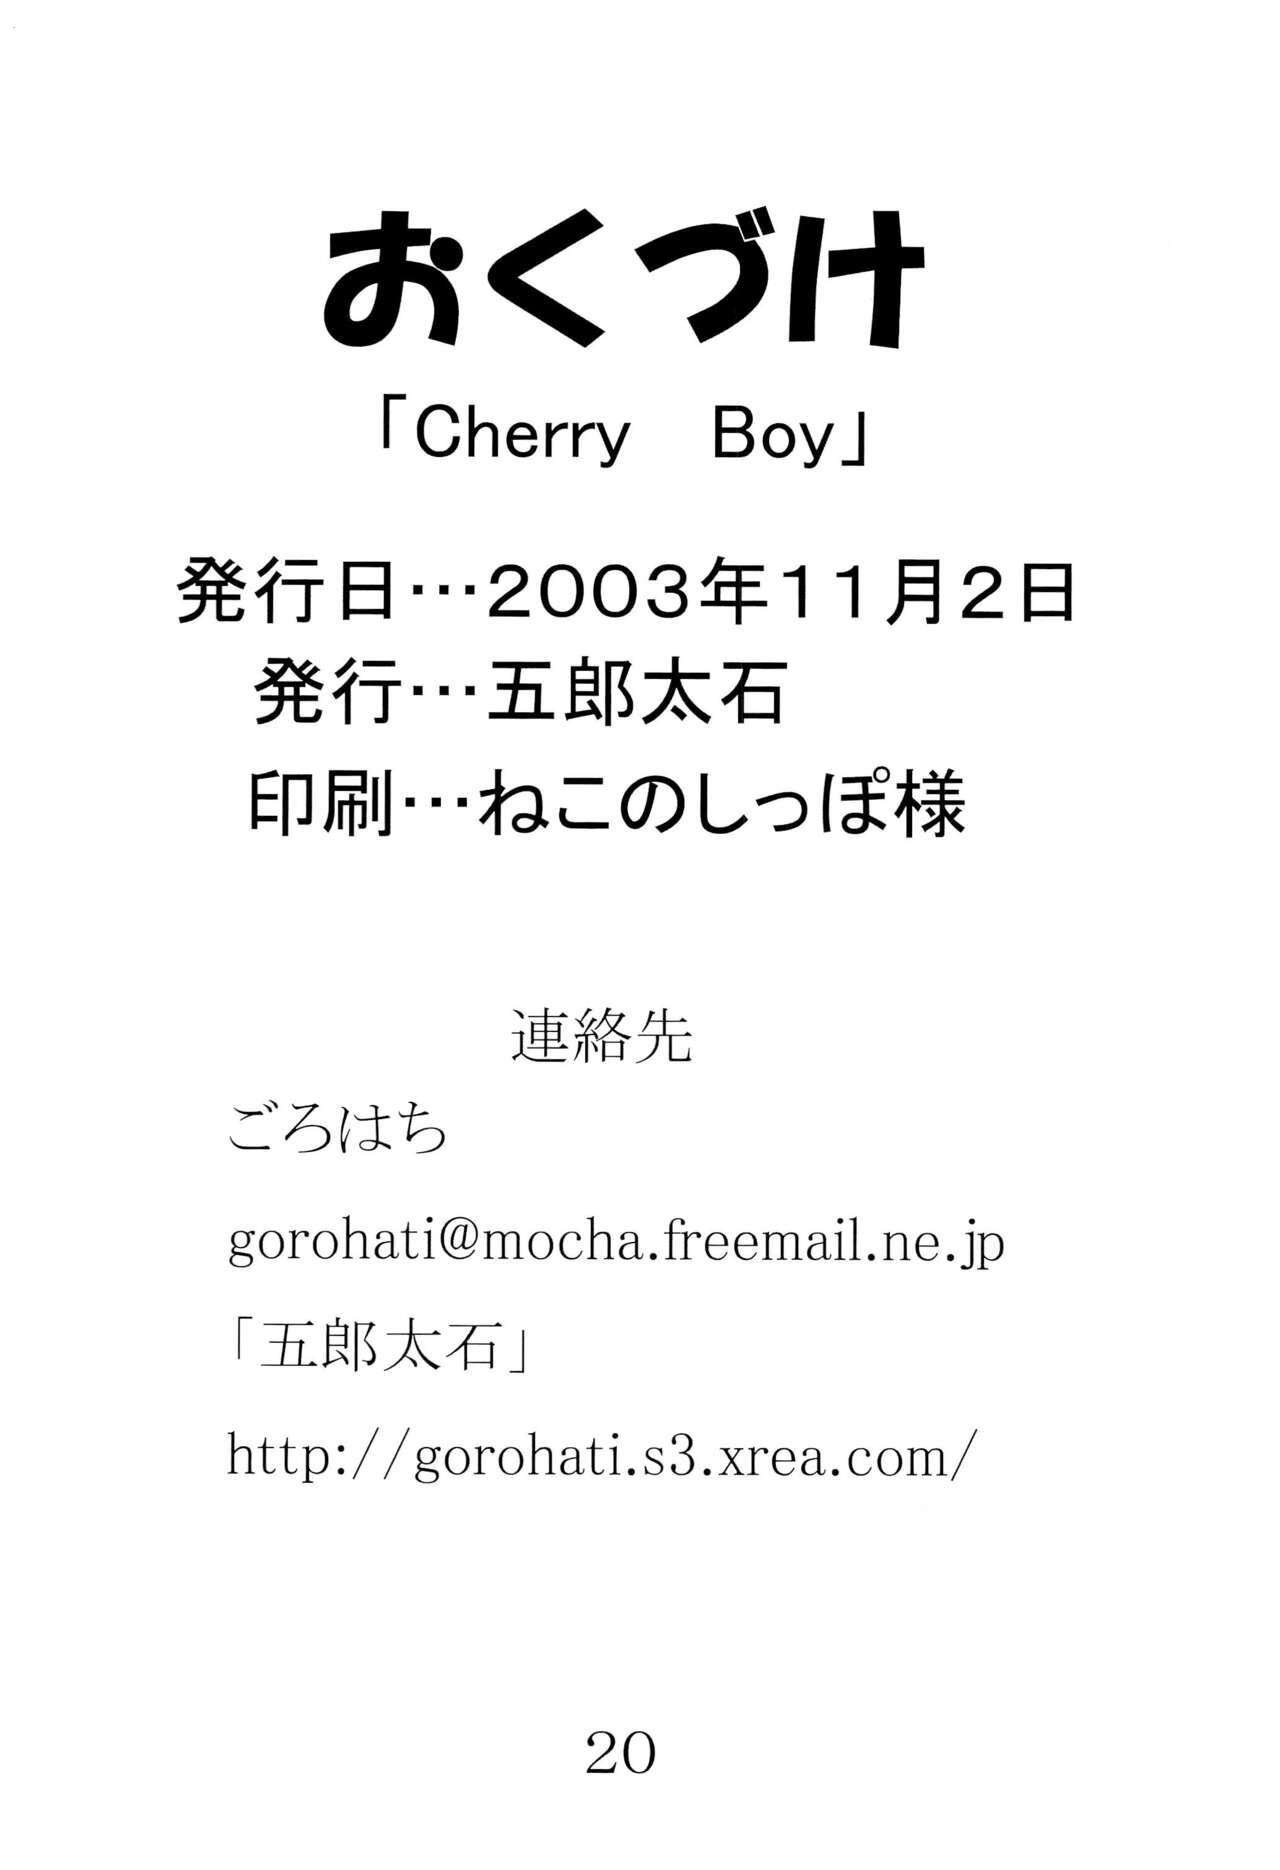 Cherry Boy 21